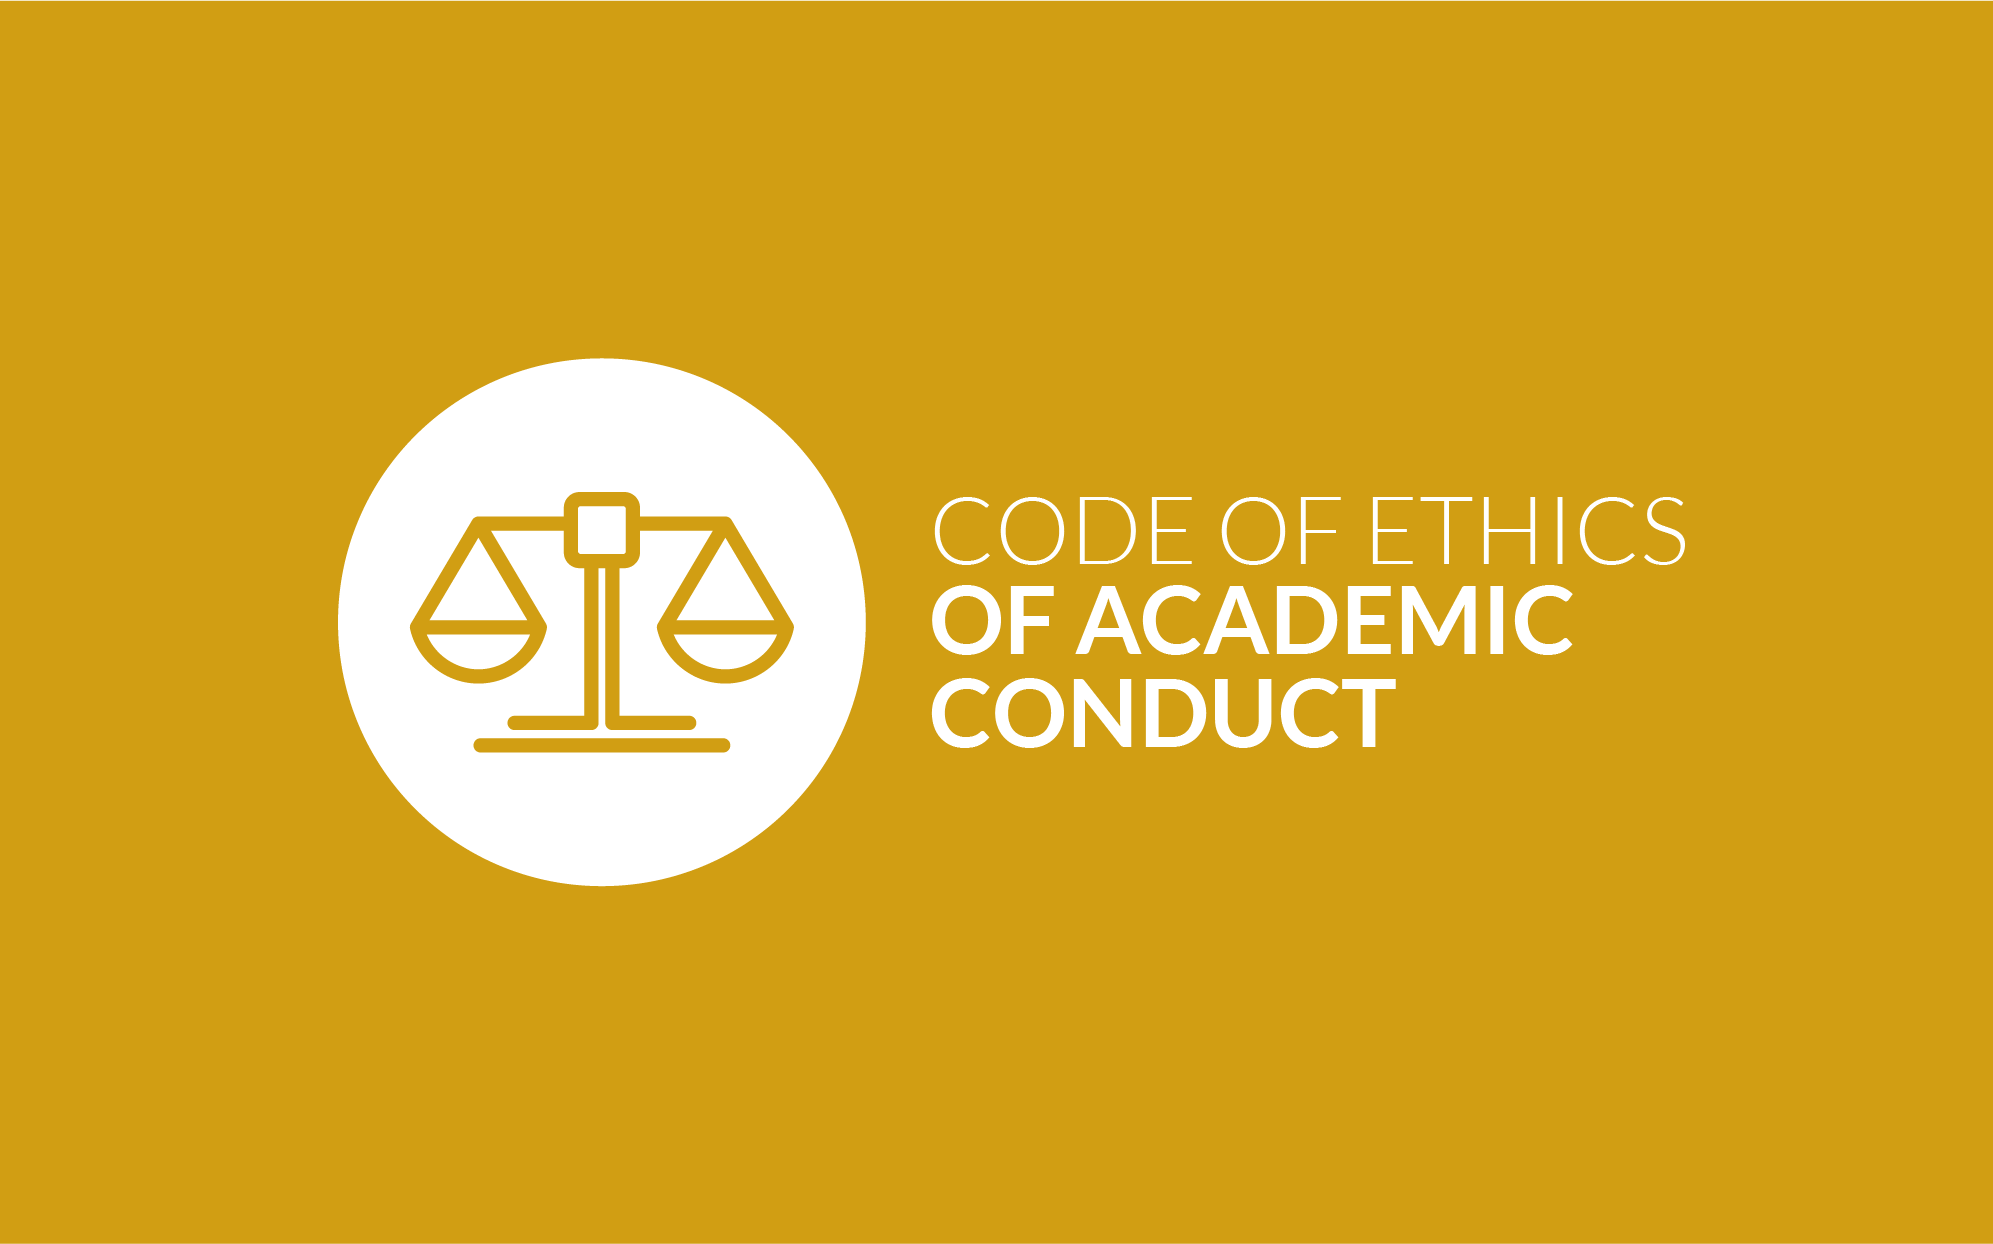 Code of ethics of academic conduct